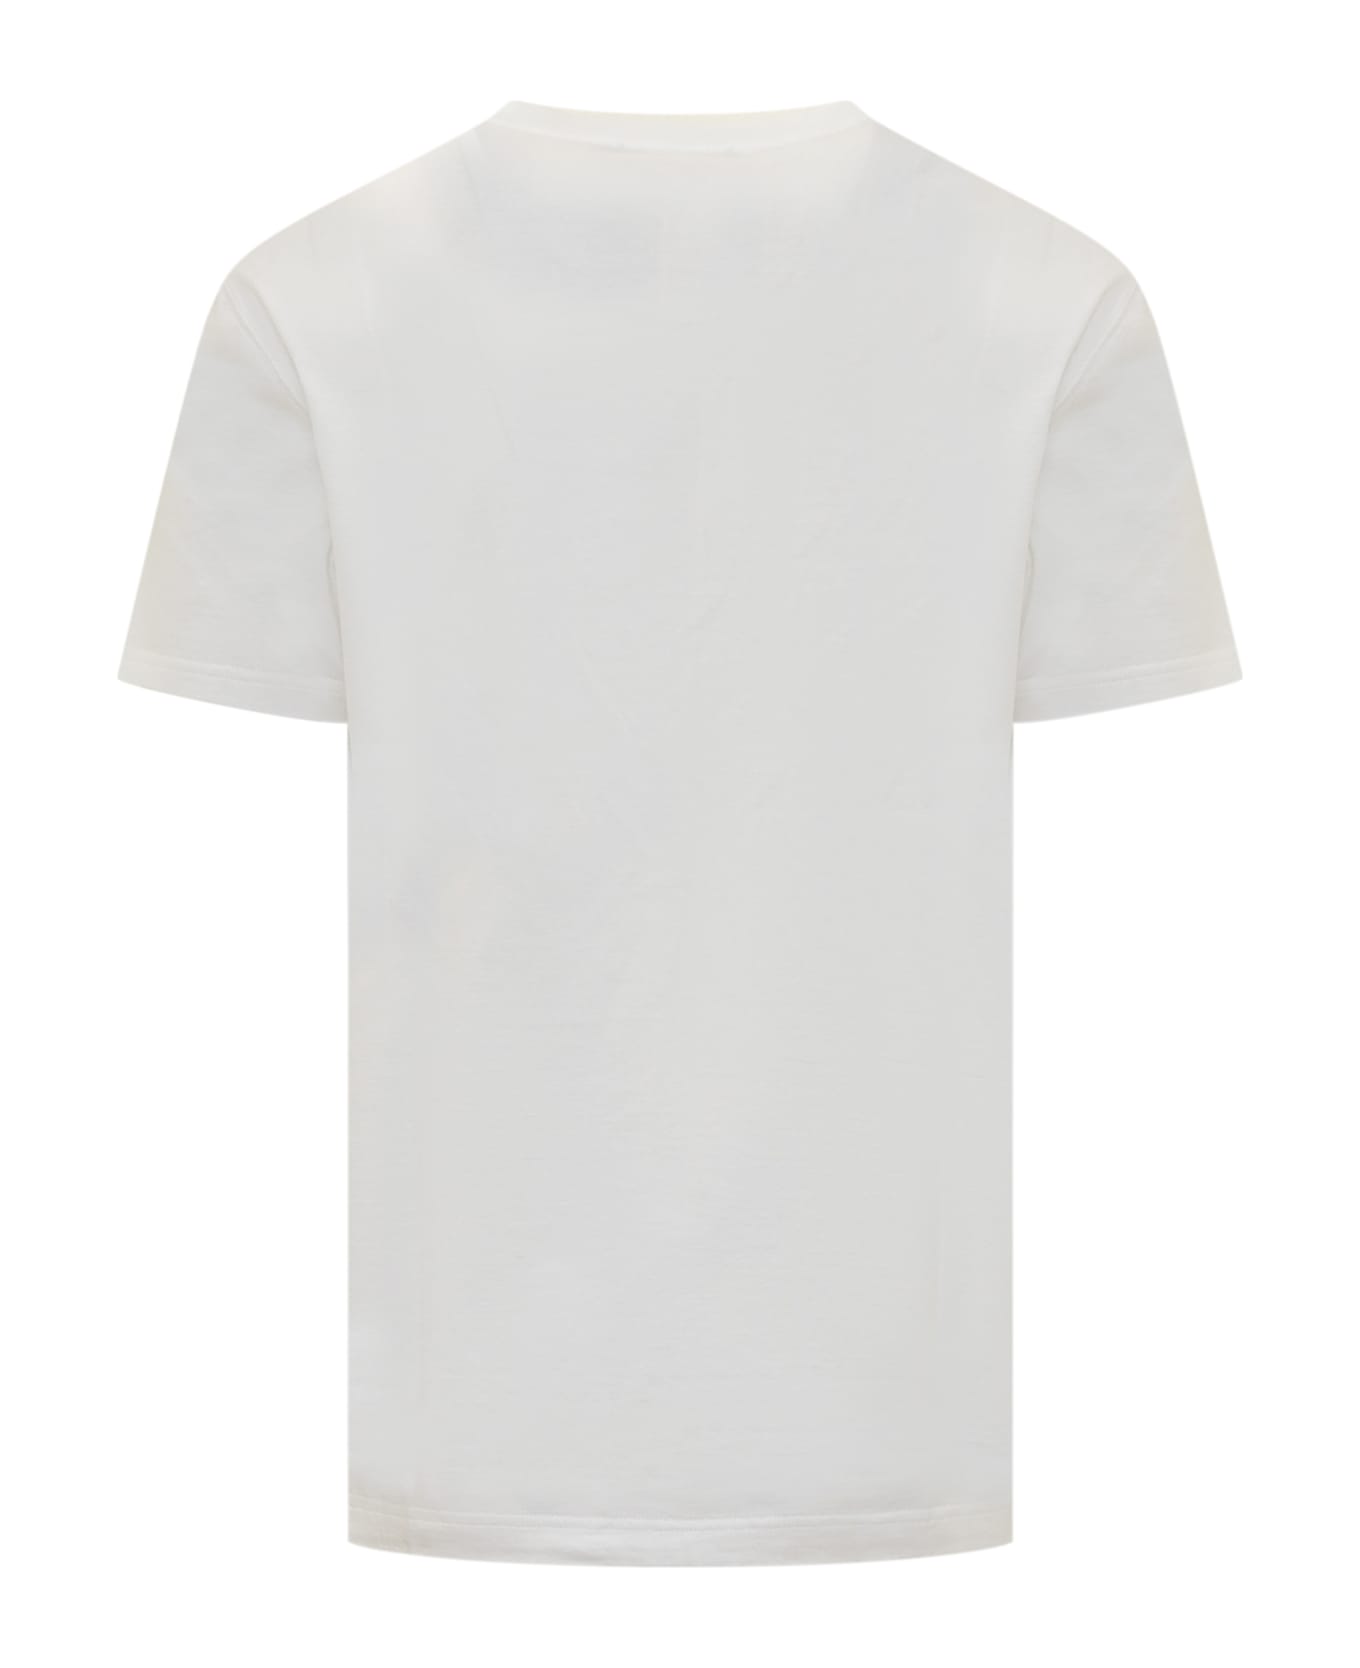 Dolce & Gabbana Marina T-shirt - BIANCO OTTICO シャツ